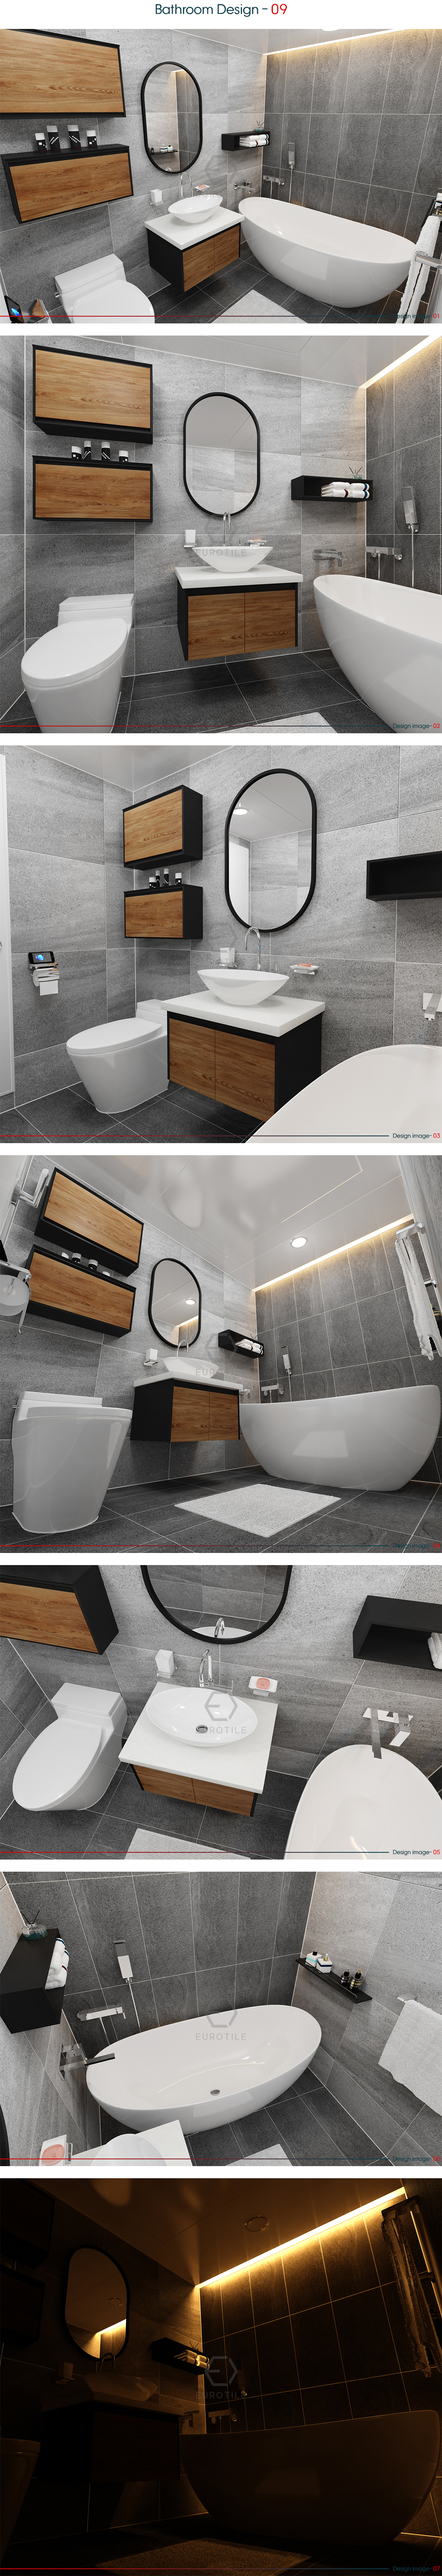 bathroomdesign-09_110354.jpg